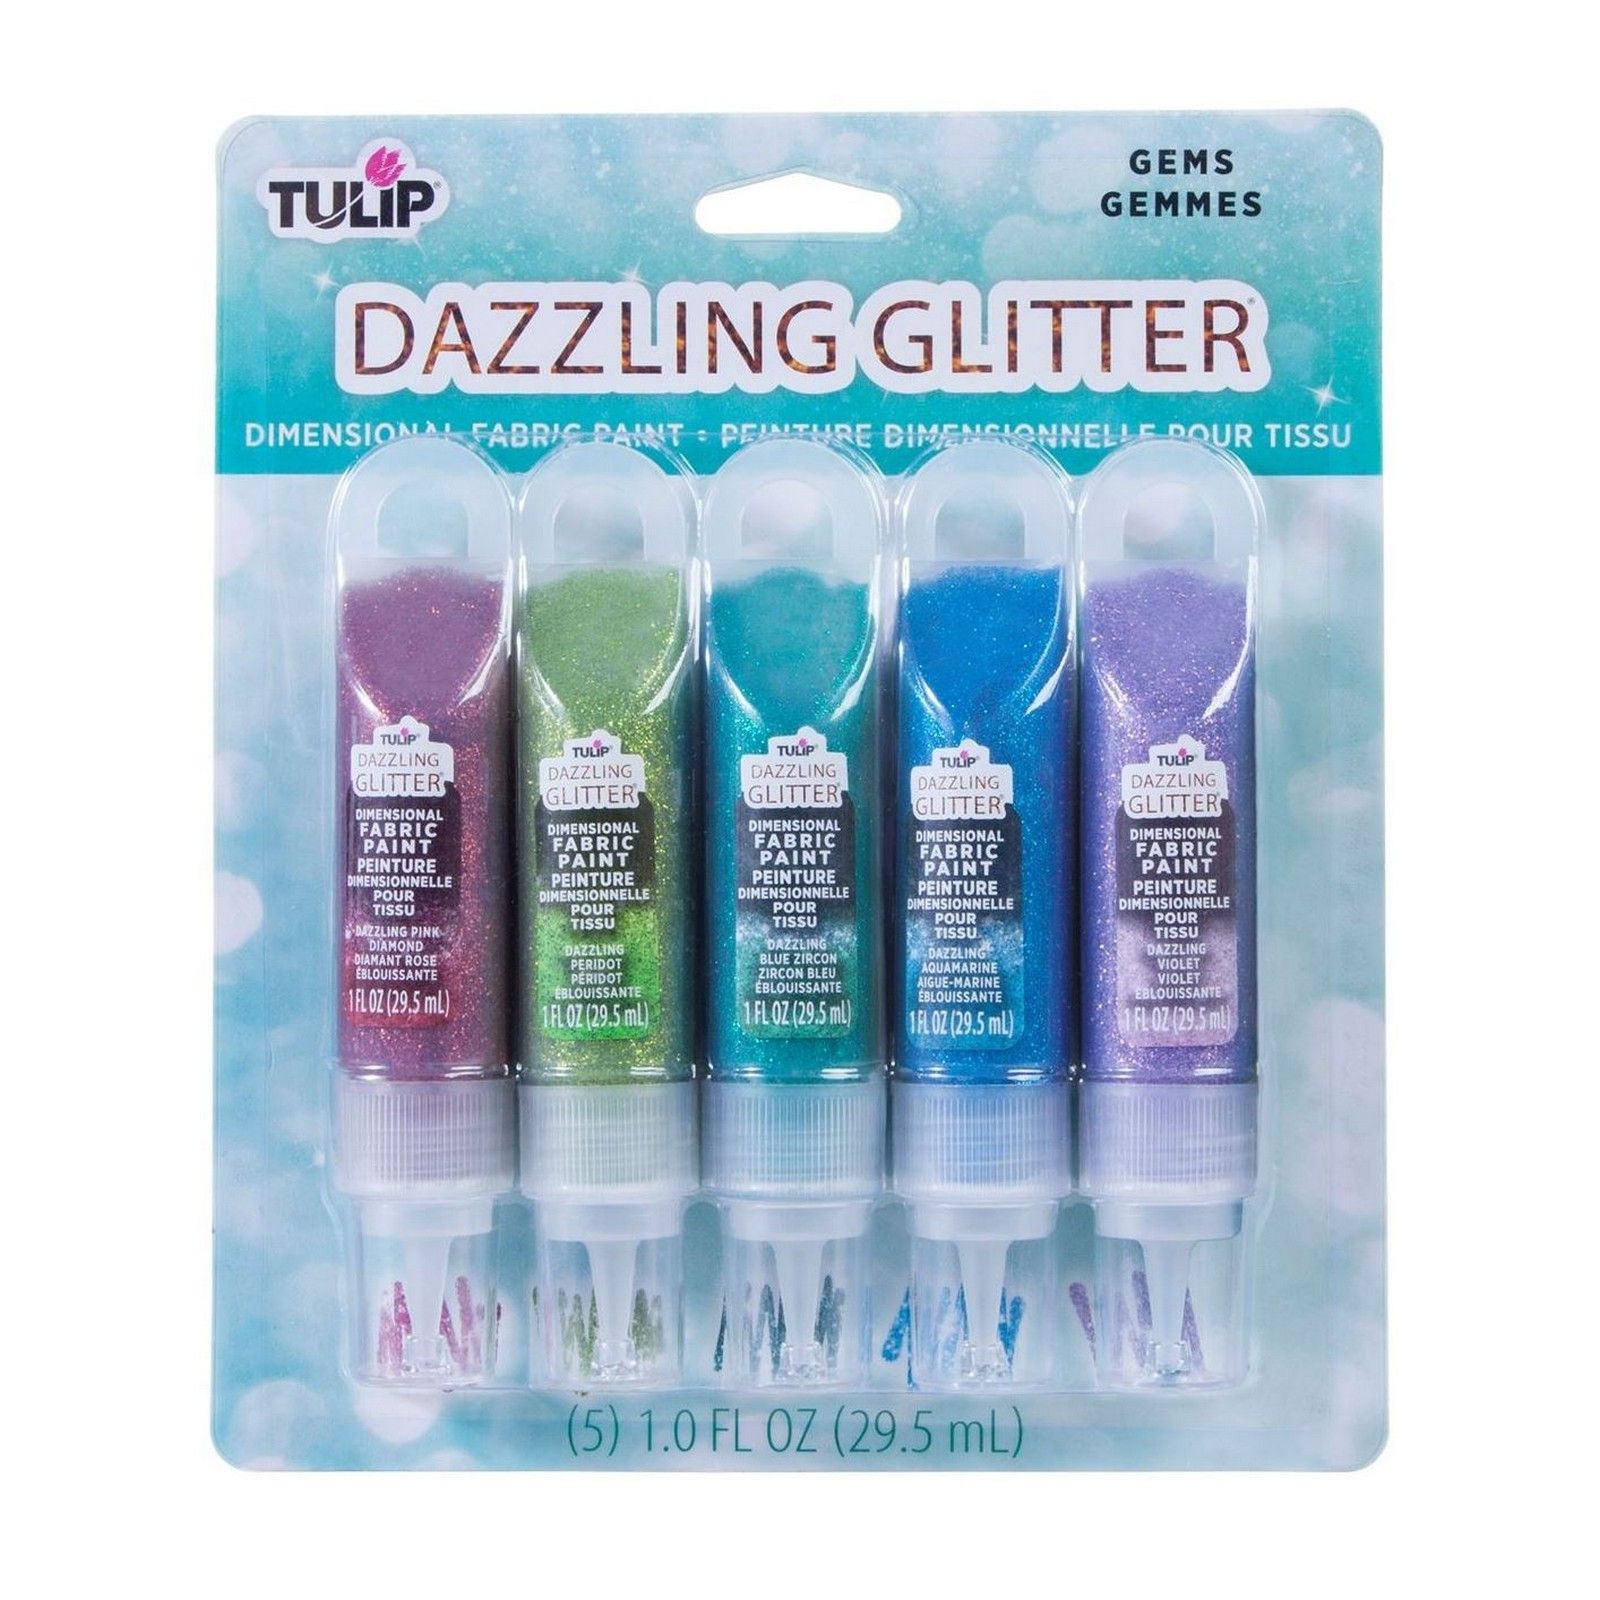 Tulip • Dimensional fabric paint dazzling glitters Gems  